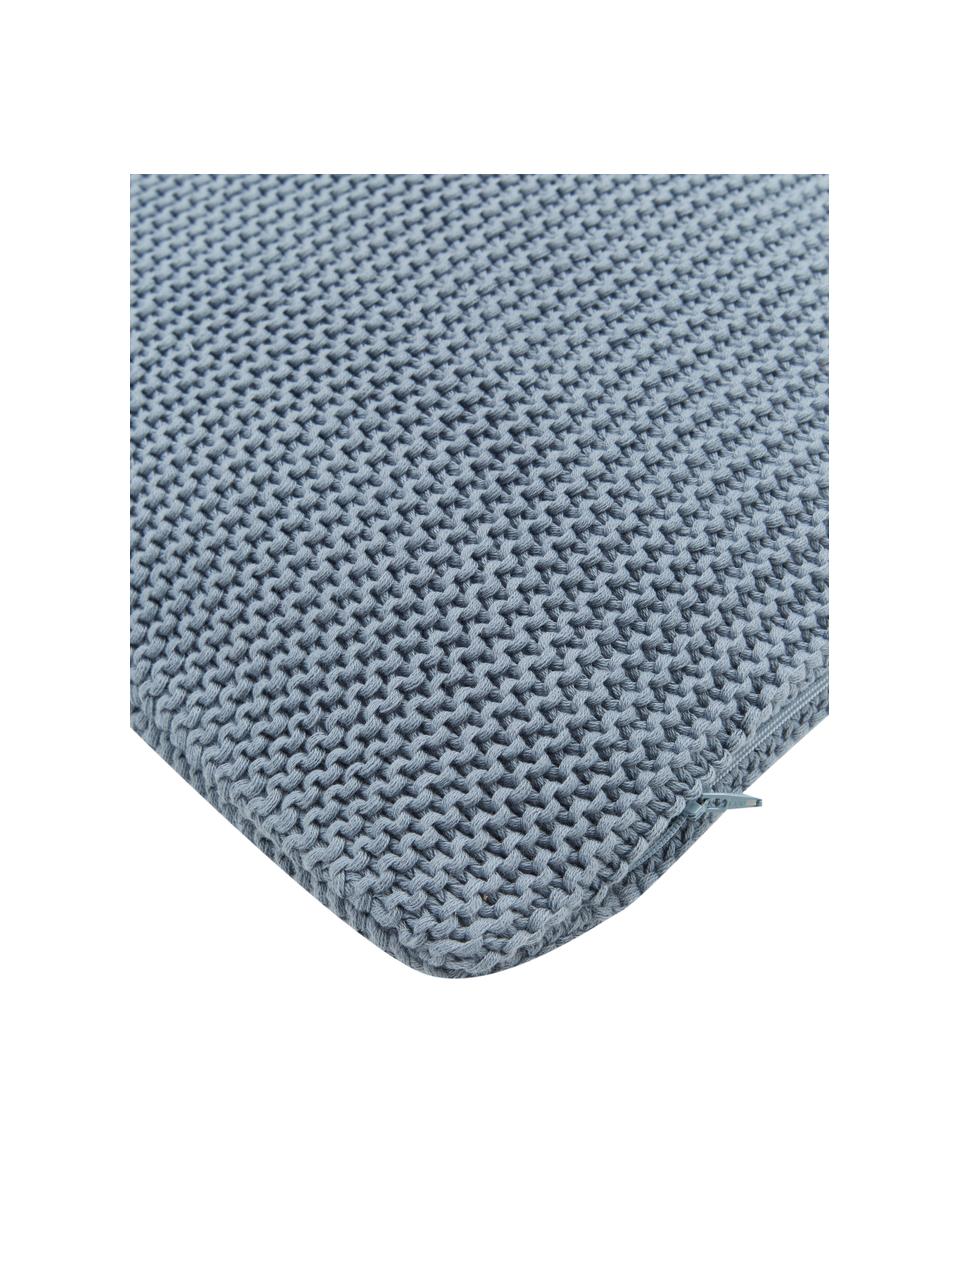 Federa arredo a maglia in cotone organico blu Adalyn, 100% cotone organico certificato GOTS, Blu, Larg. 40 x Lung. 40 cm